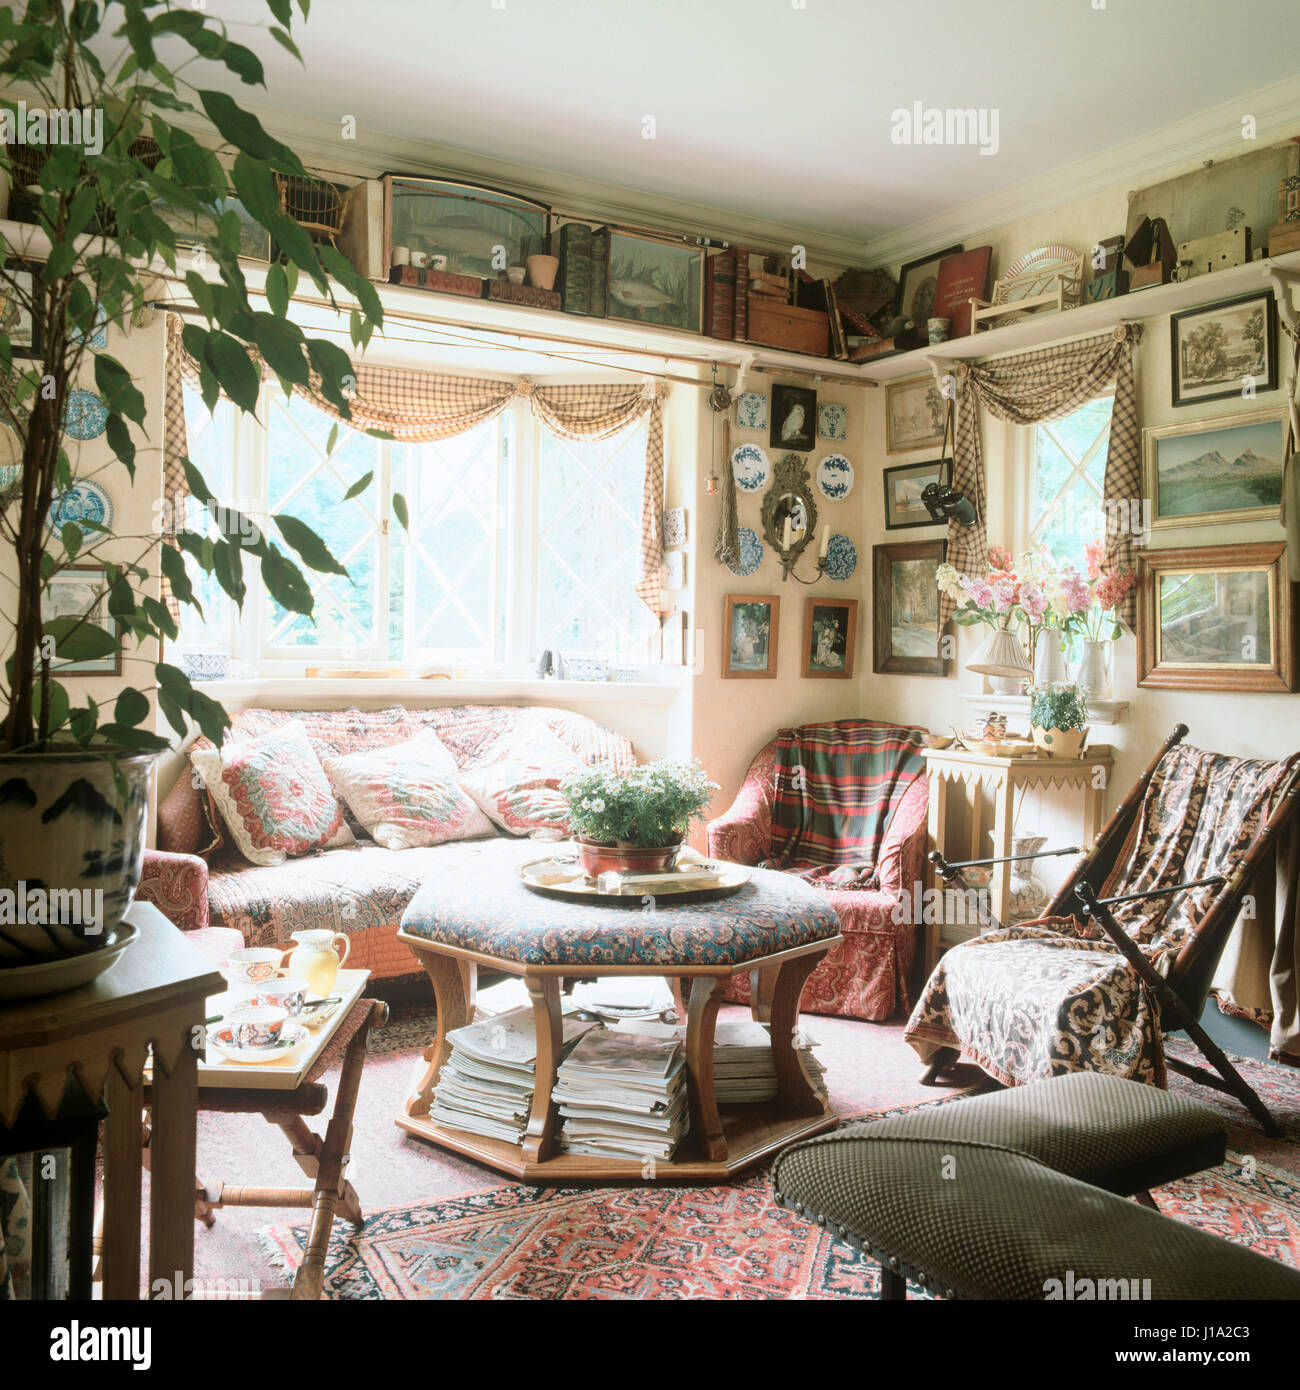 Retro country style living room. Stock Photo